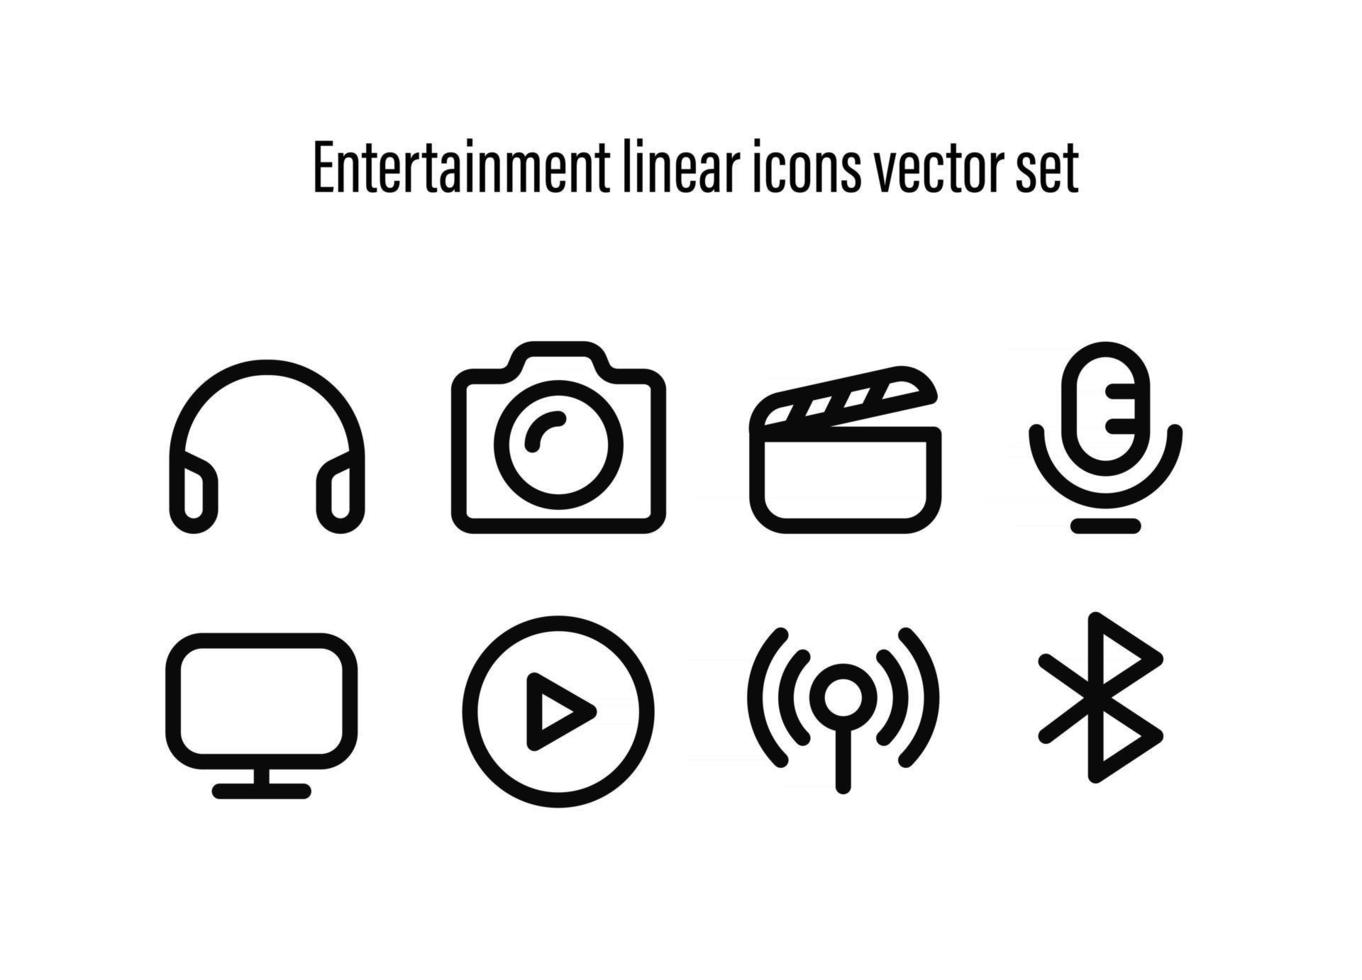 Entertainment linear icons vector set